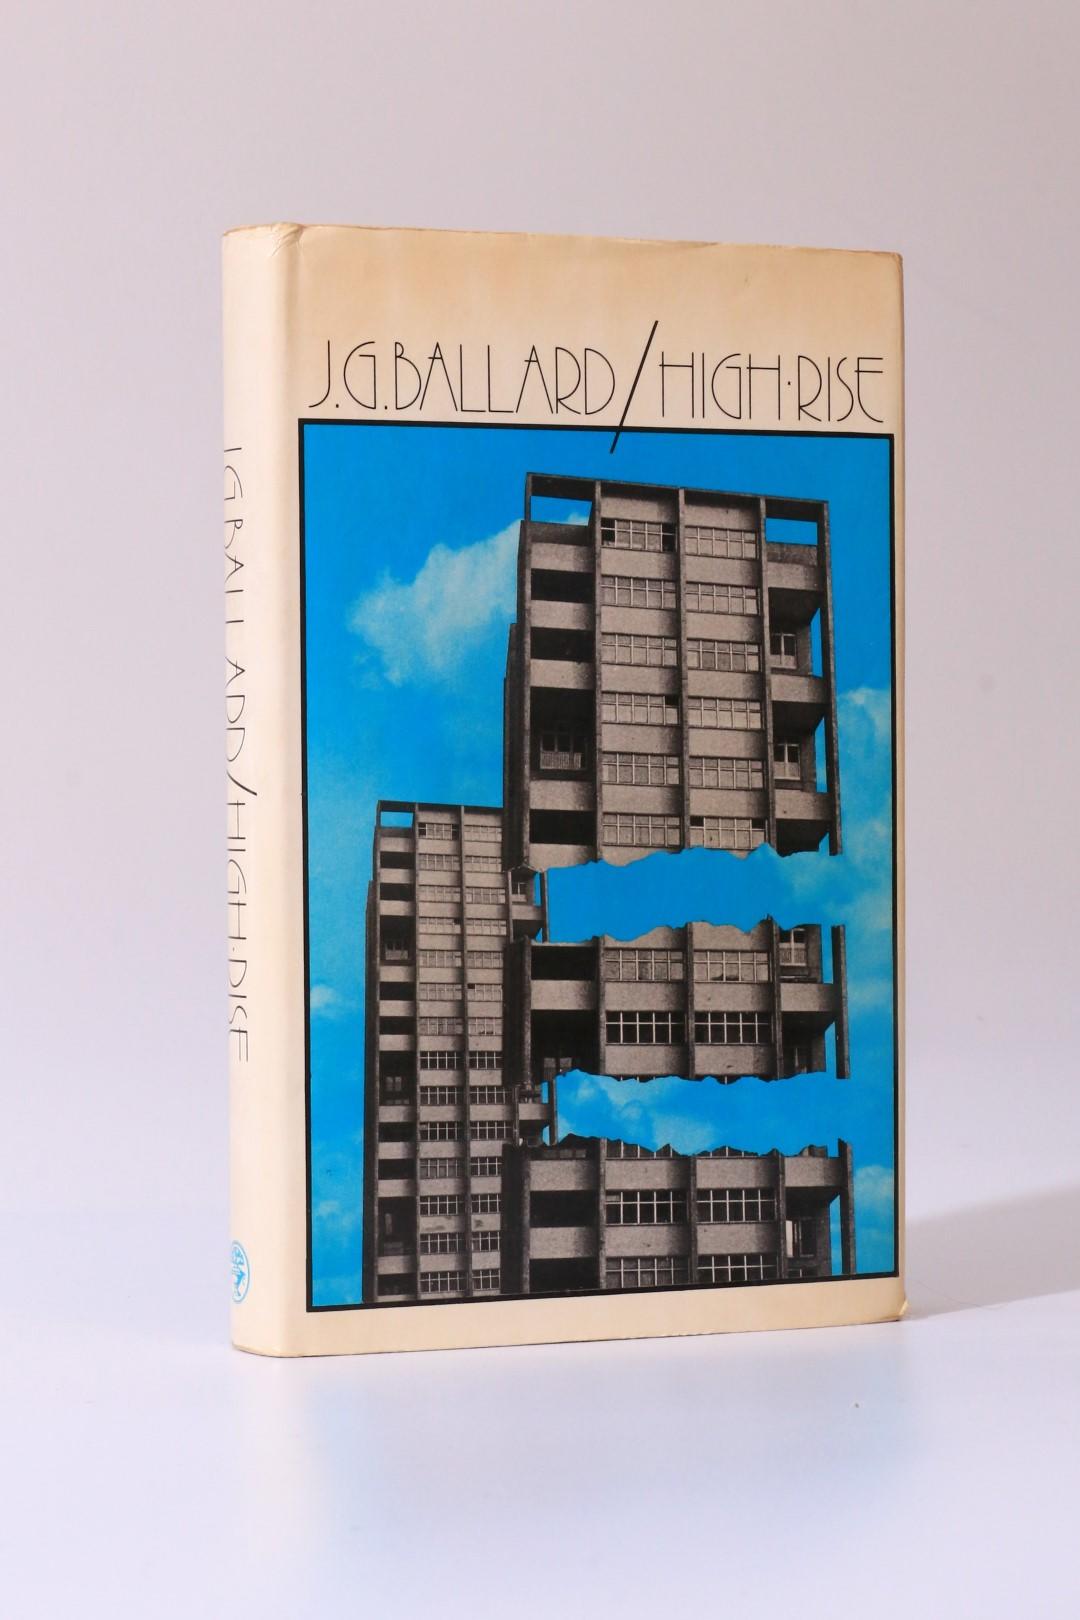 J.G. Ballard - High Rise - Jonathan Cape, 1975, First Edition.